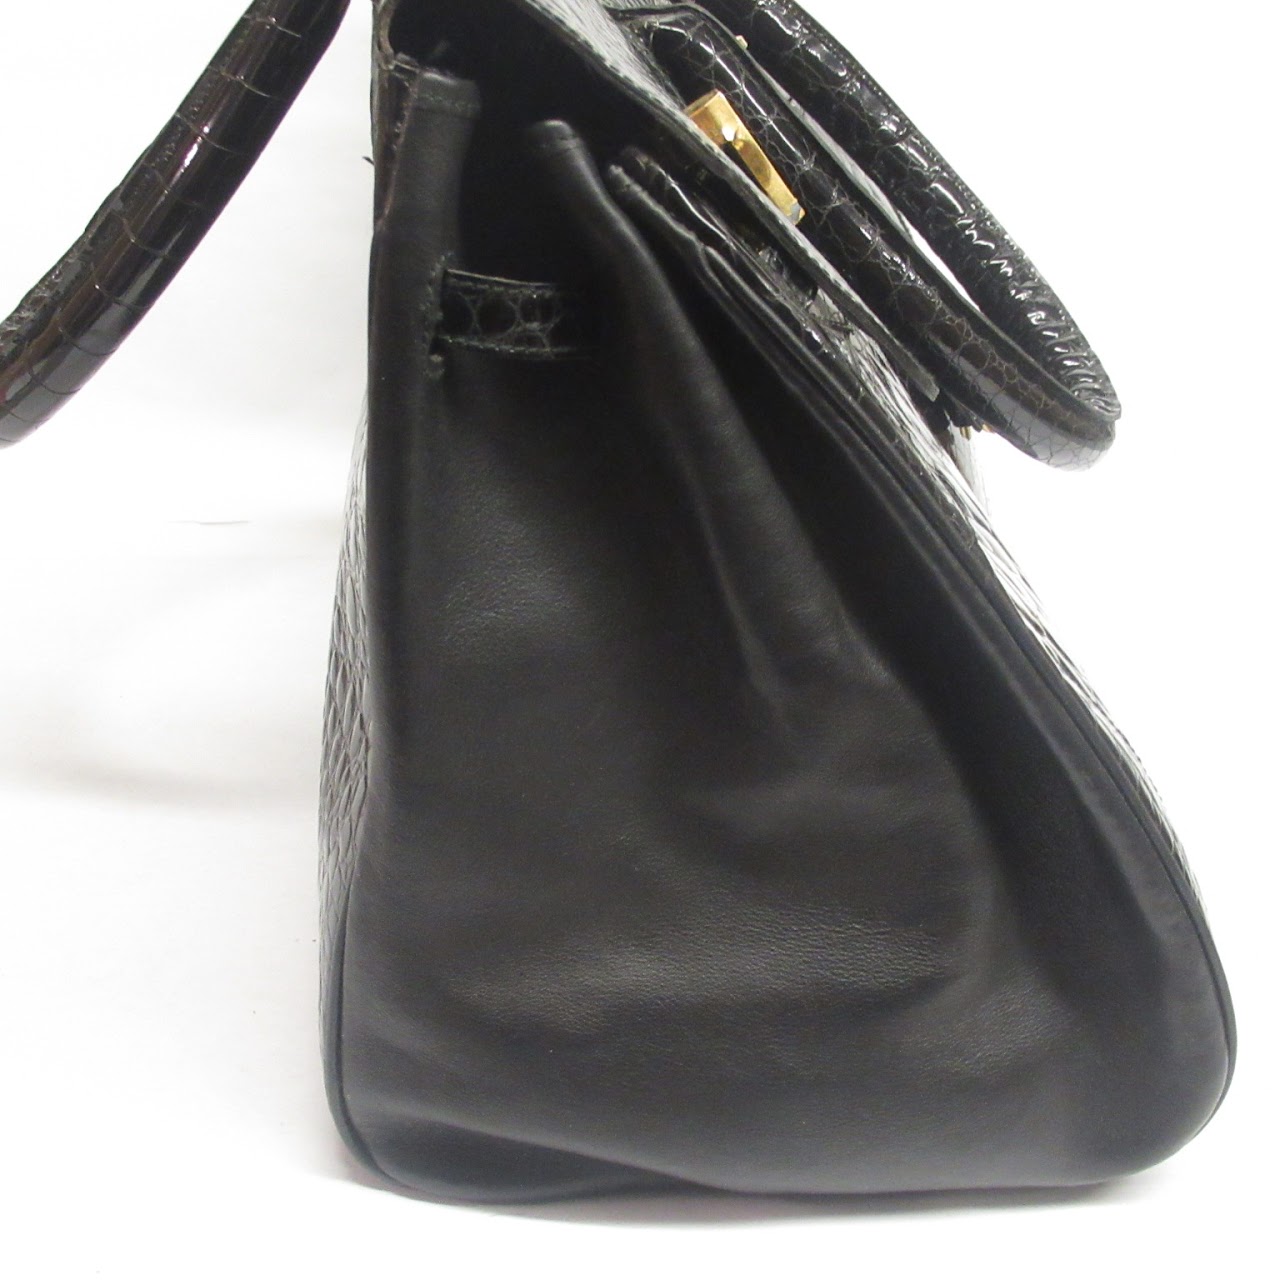 Vintage French Croc-Print Leather Handbag